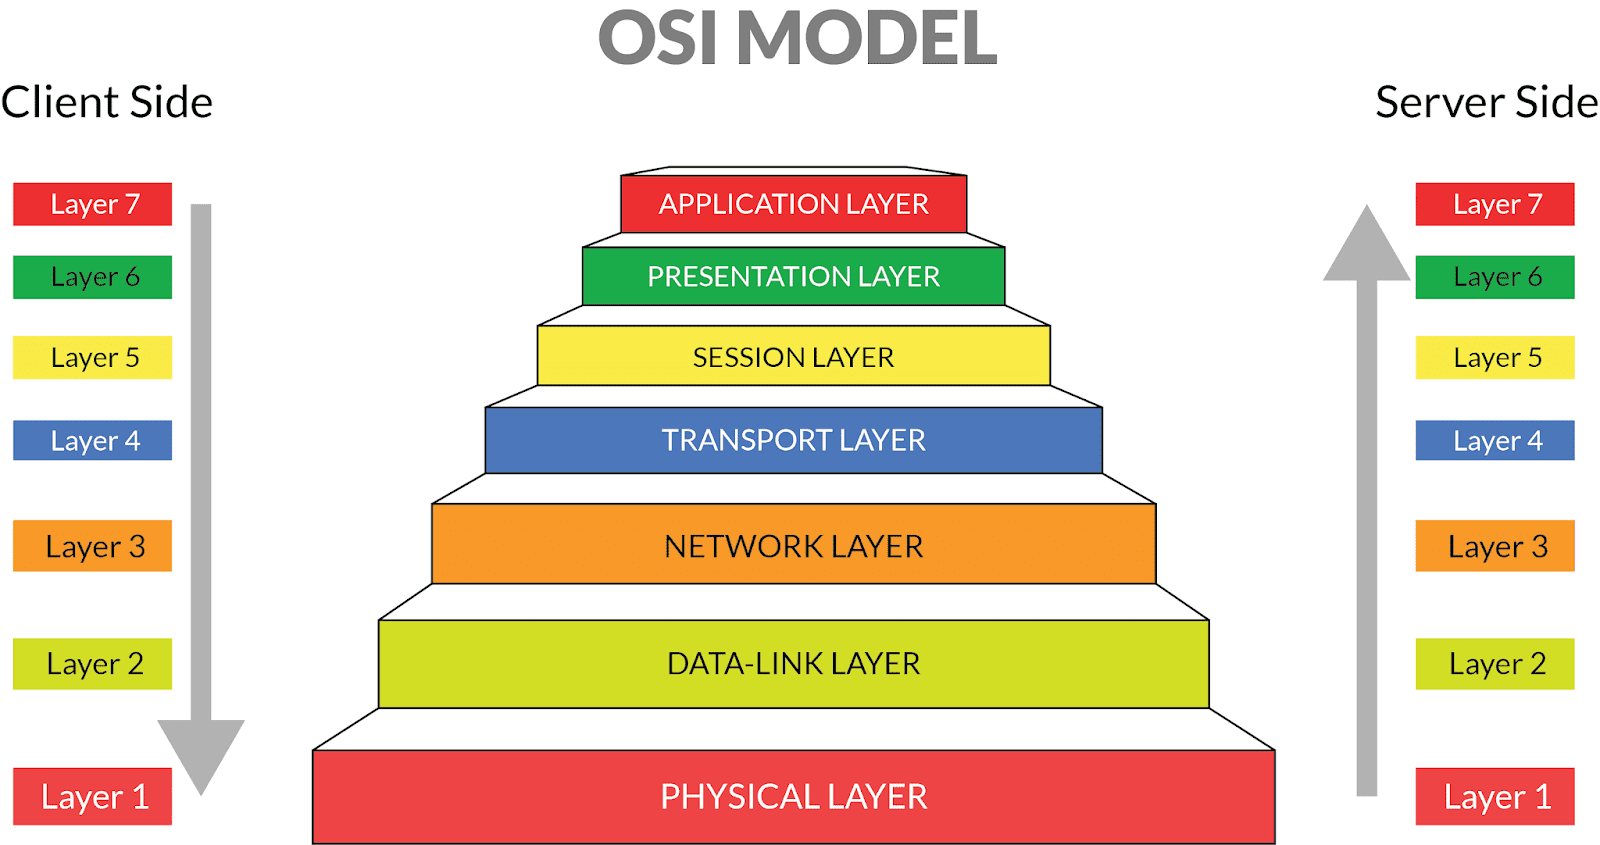 define presentation layer in computer networks